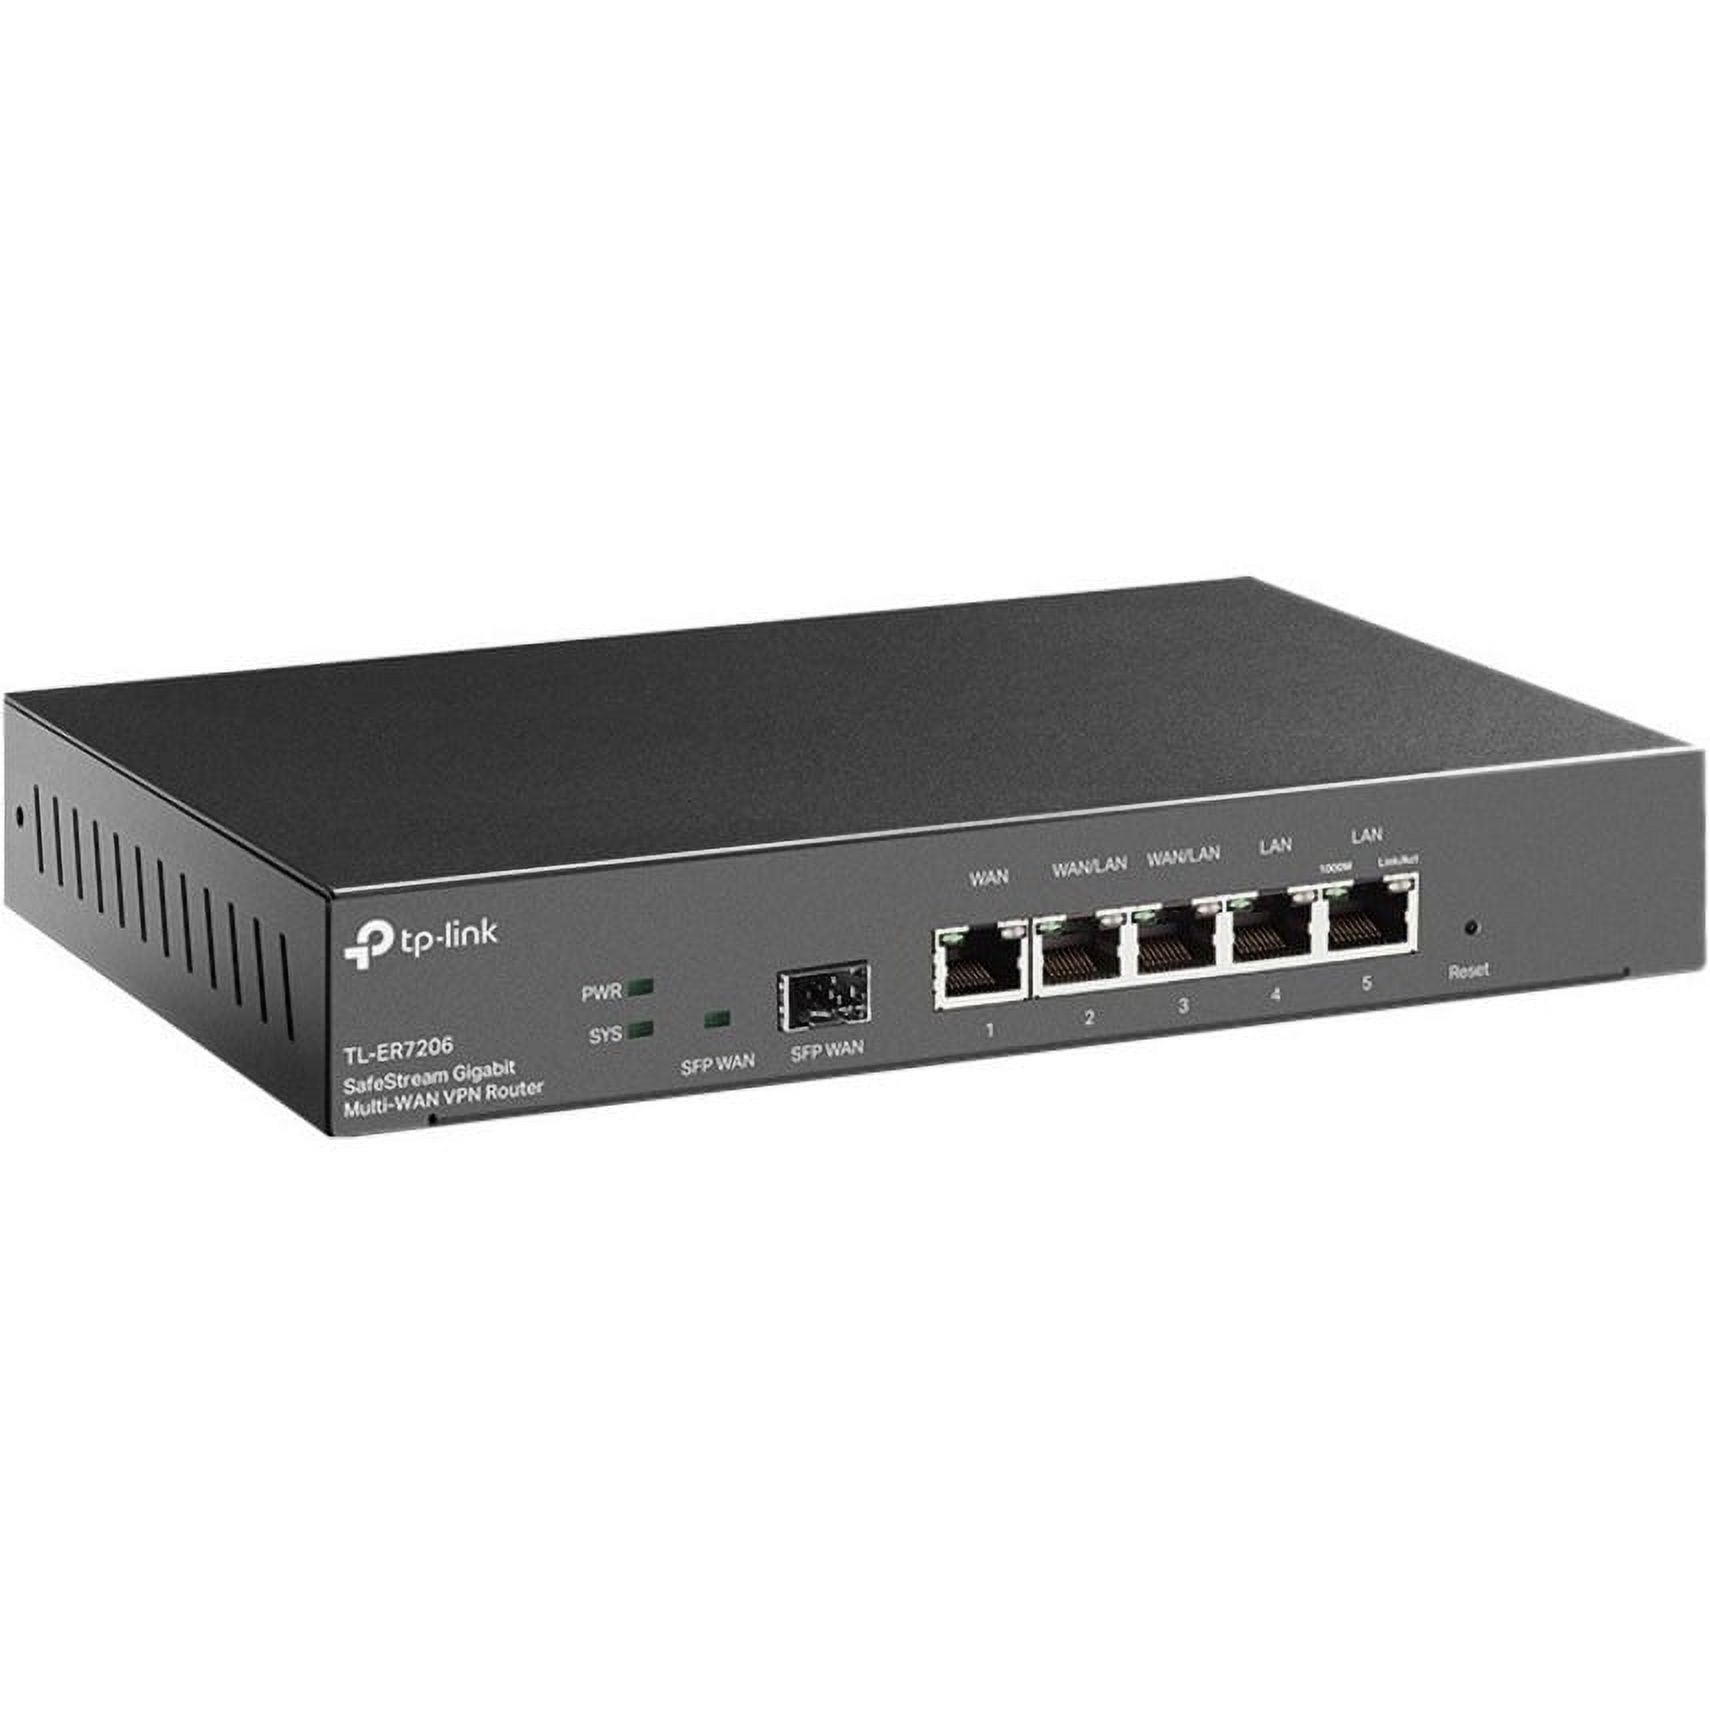 TP-Link ER7206 - Multi-WAN Professional Wired Gigabit VPN Router - image 2 of 10